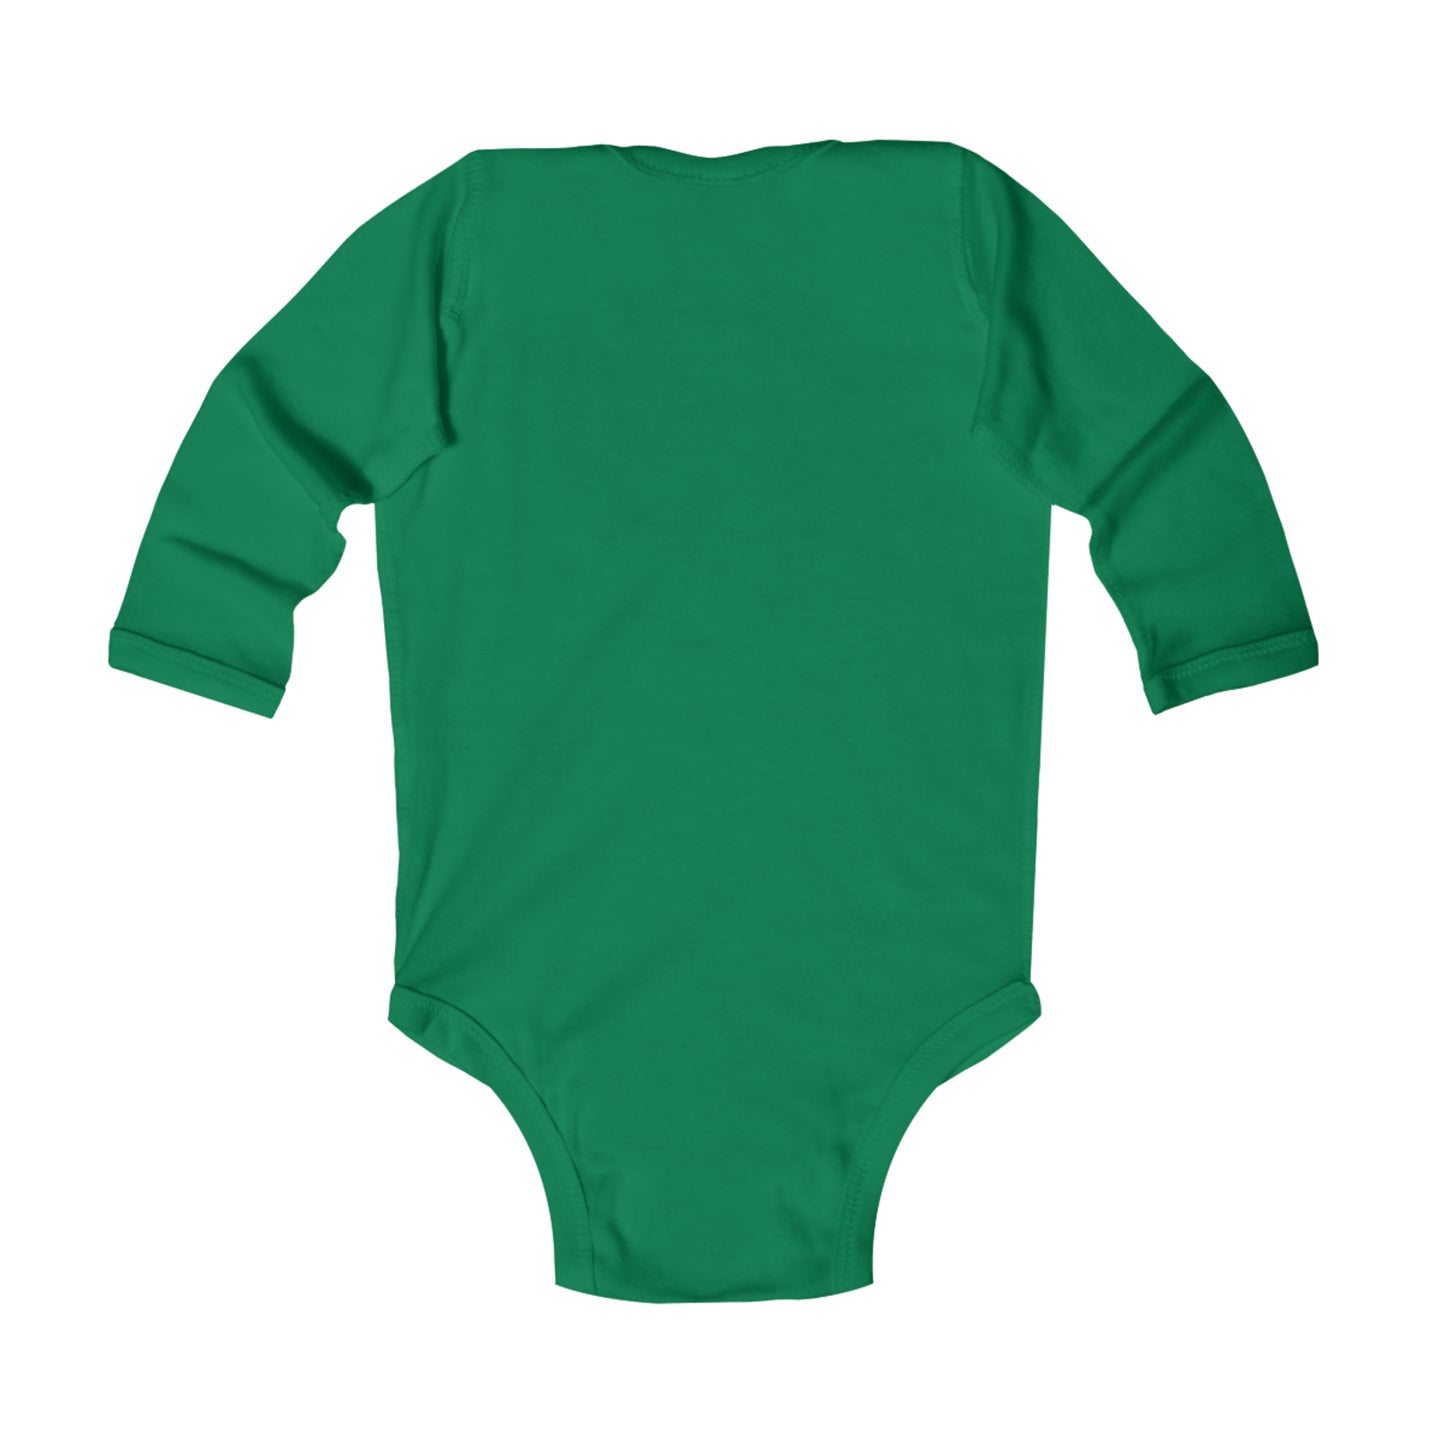 "Buttercup" the Reindog Infant Long Sleeve Bodysuit